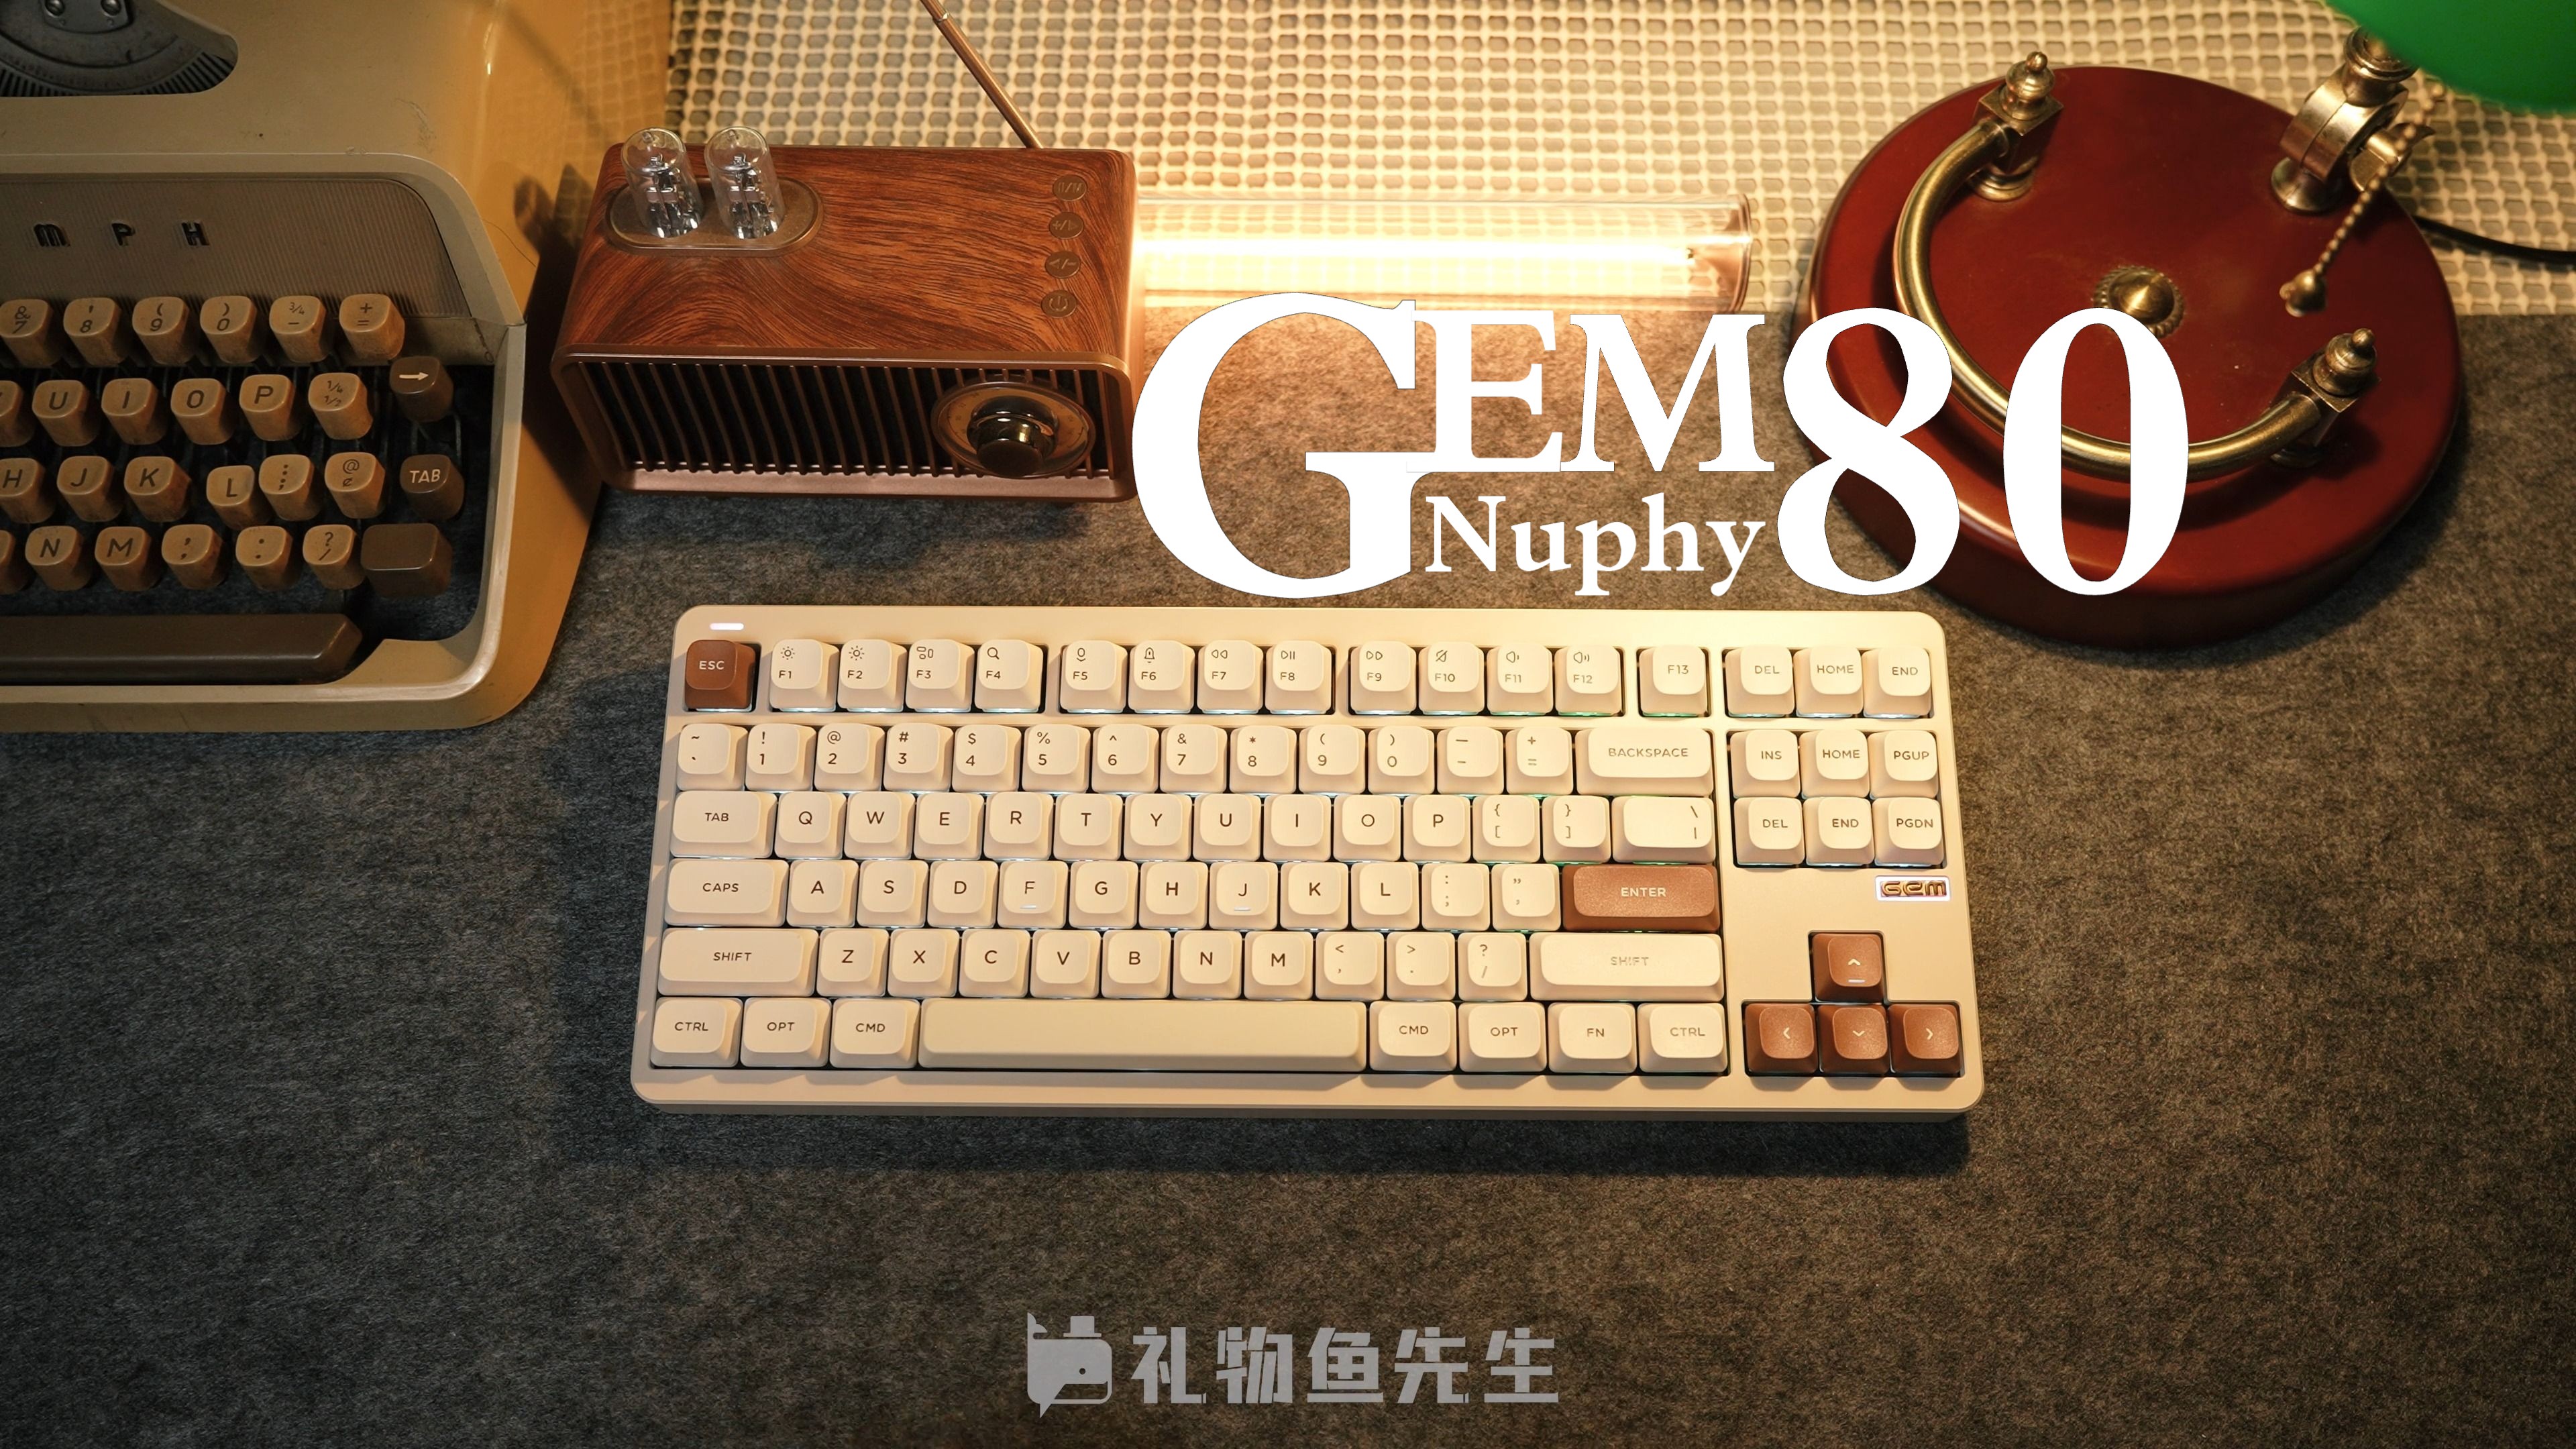 NuphyGEM80实用且扎实，值得入手。